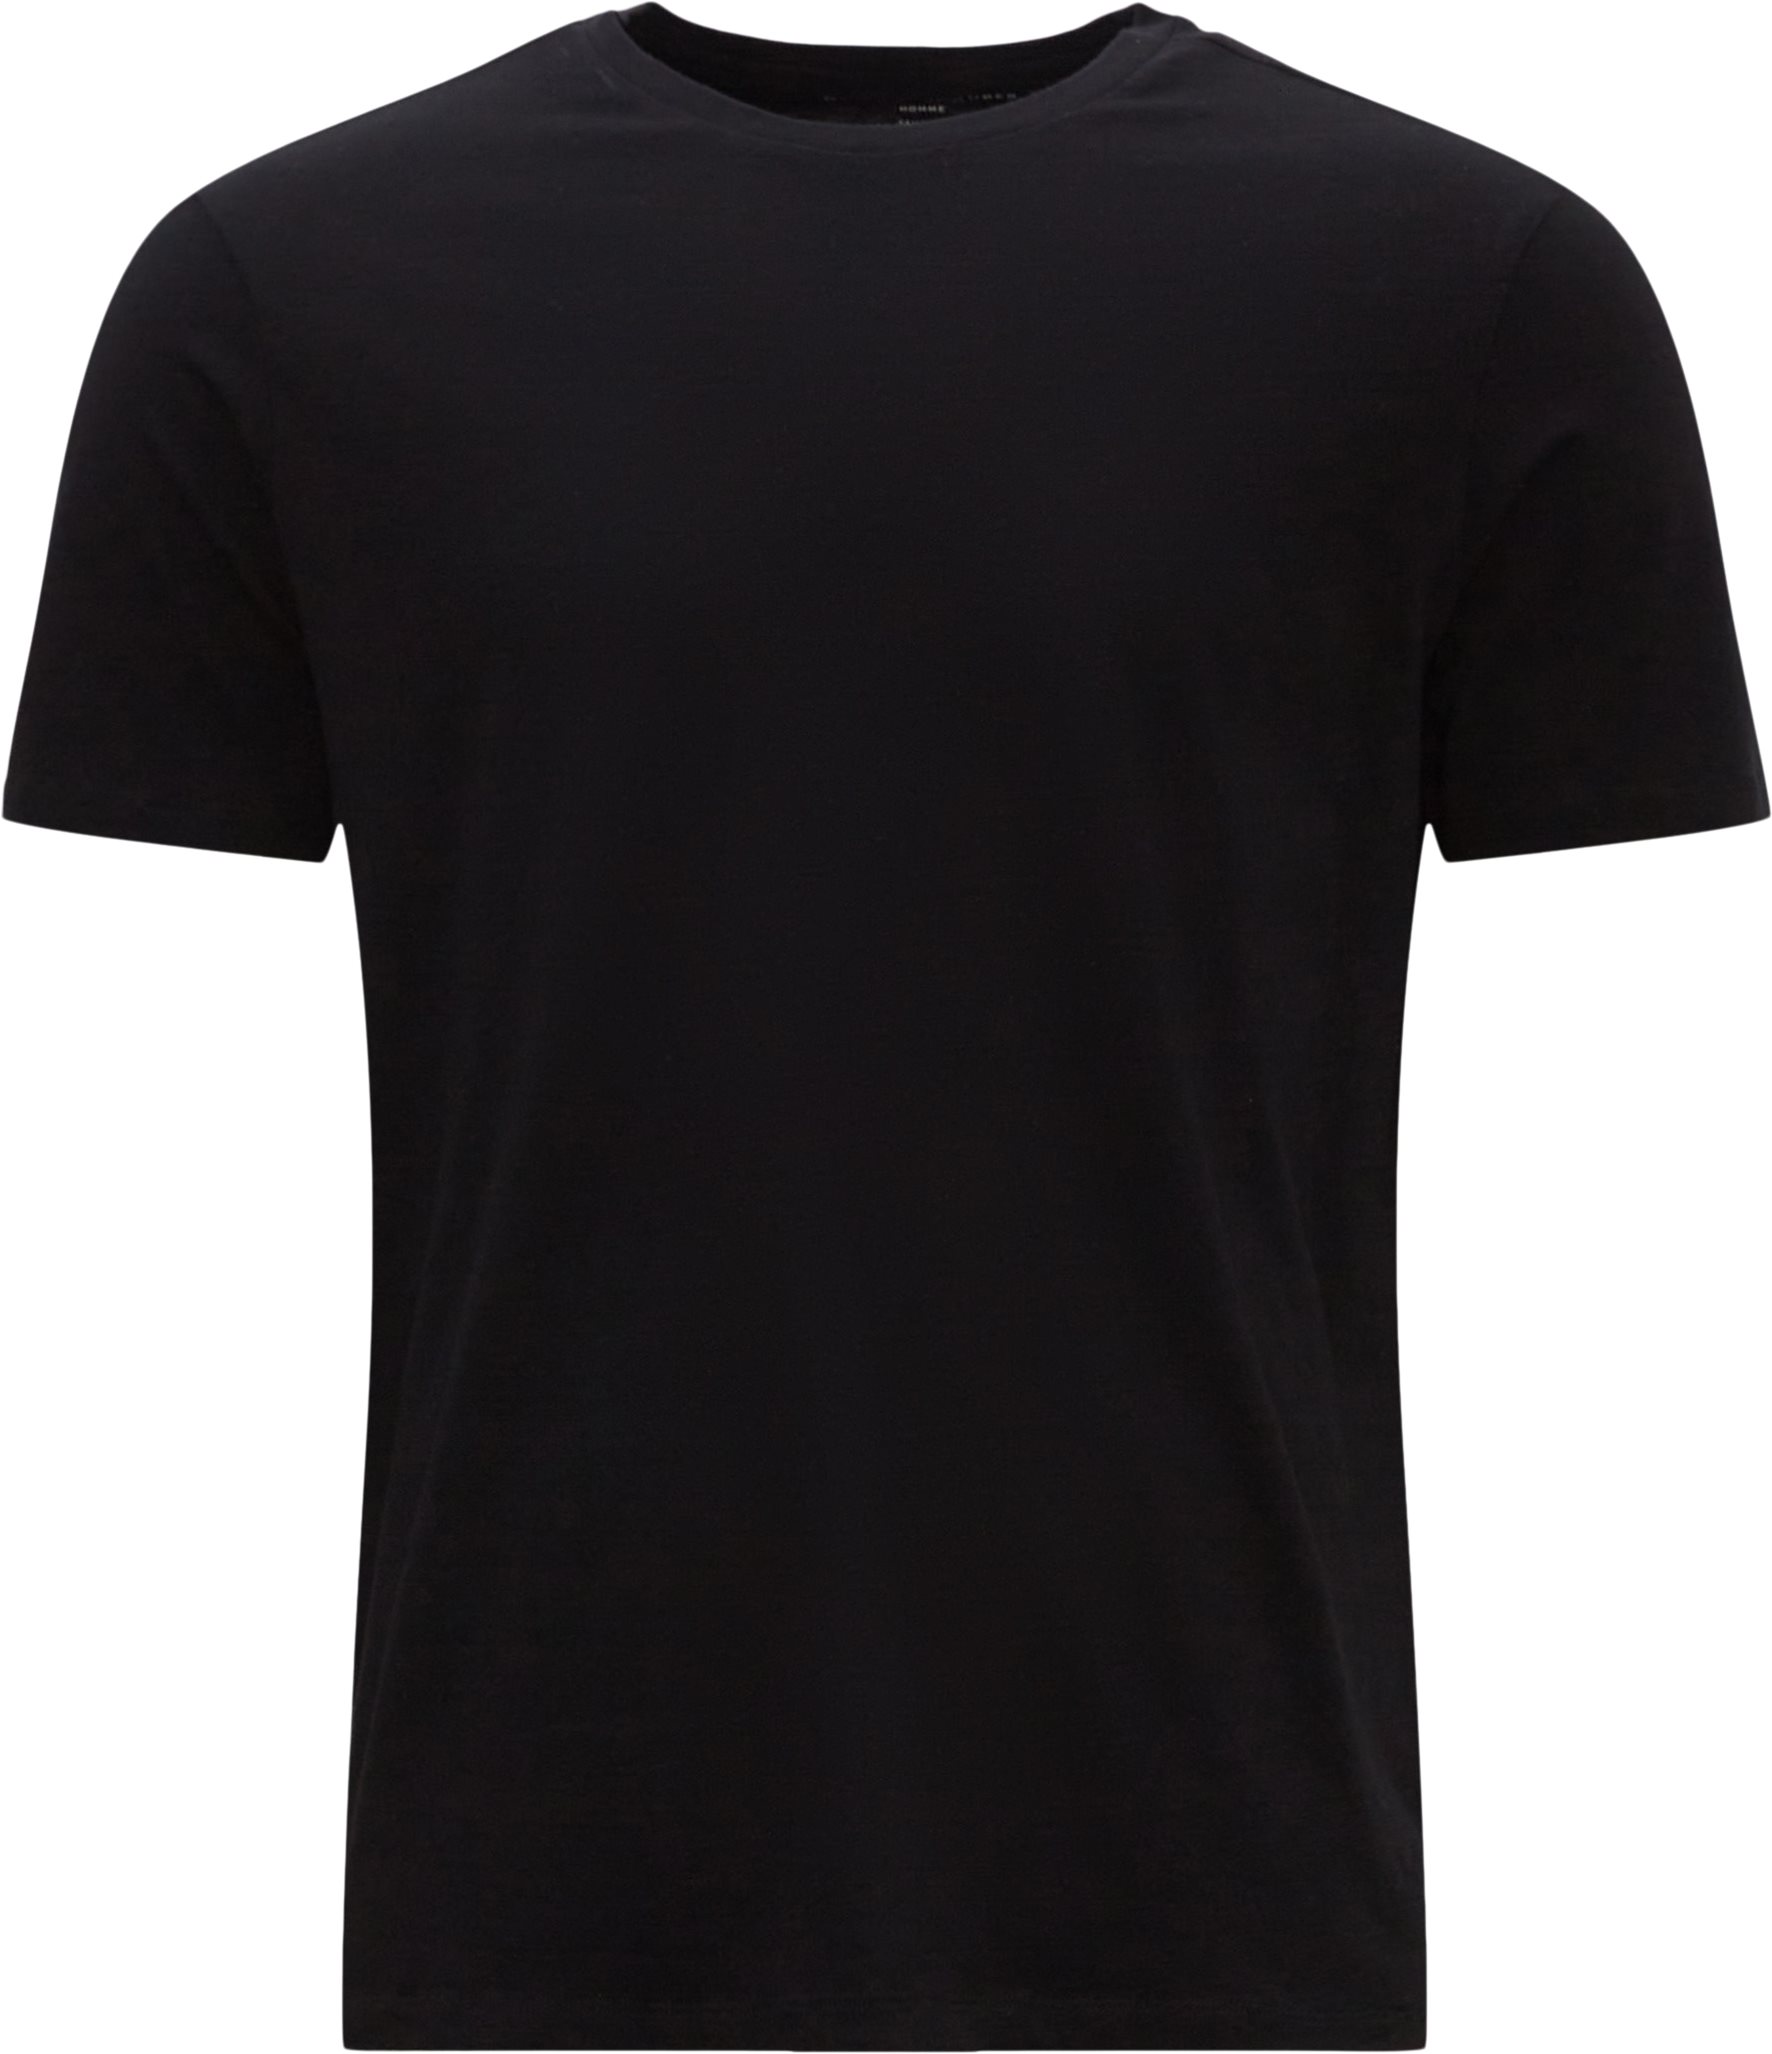 MAJESTIC FILATURES T-shirts PATRICE - M537 HTS022 Black